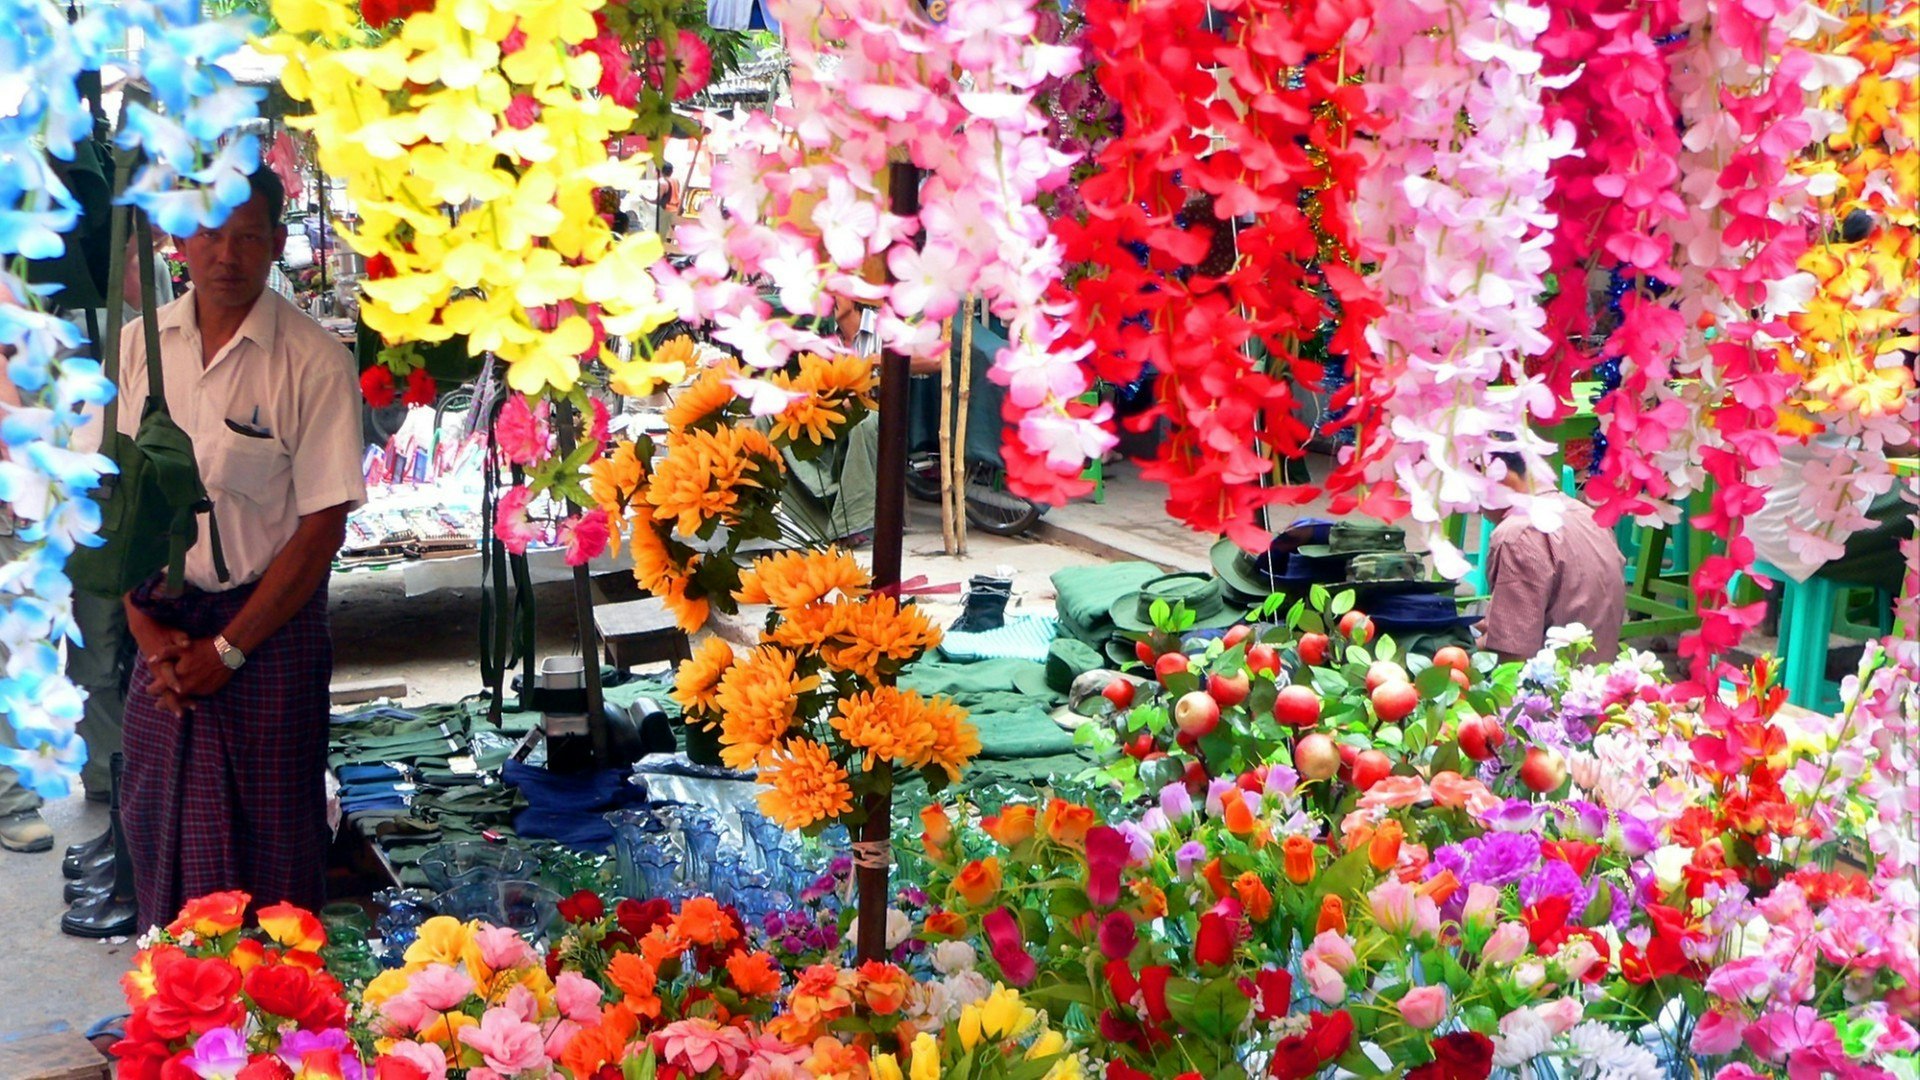 Bouquets & Garlands for Sale. Zegyo Market, Mandalay, Myanmar (Burma)